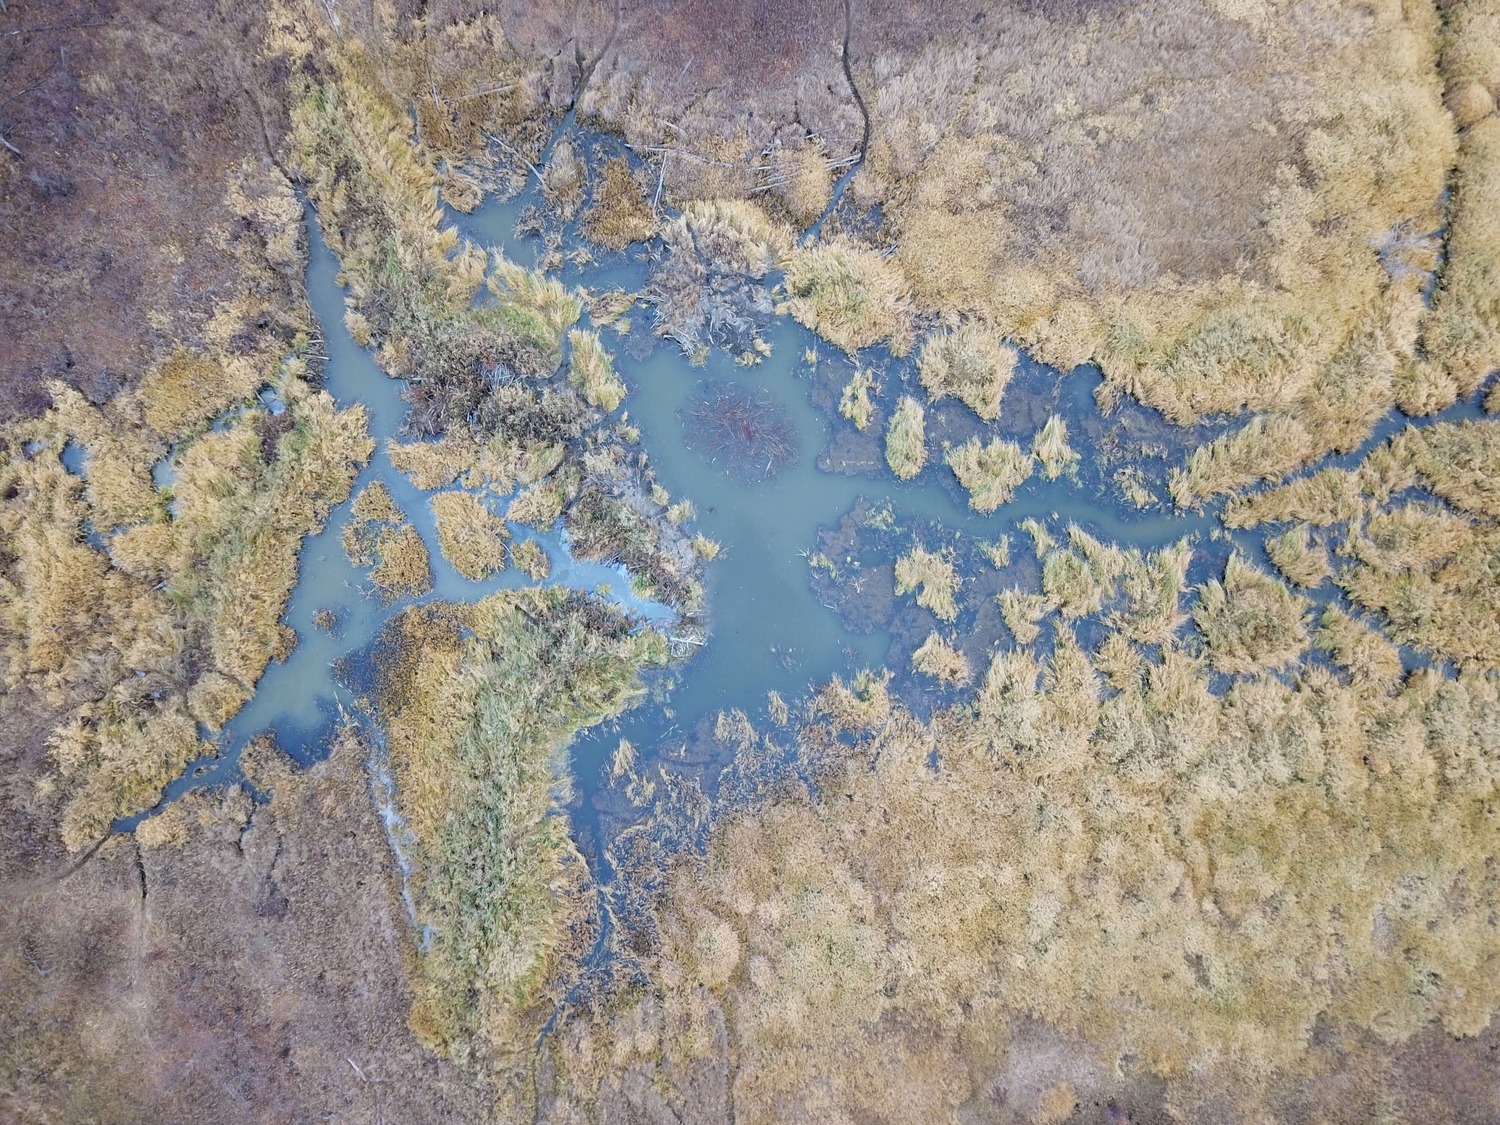 a water in a marsh